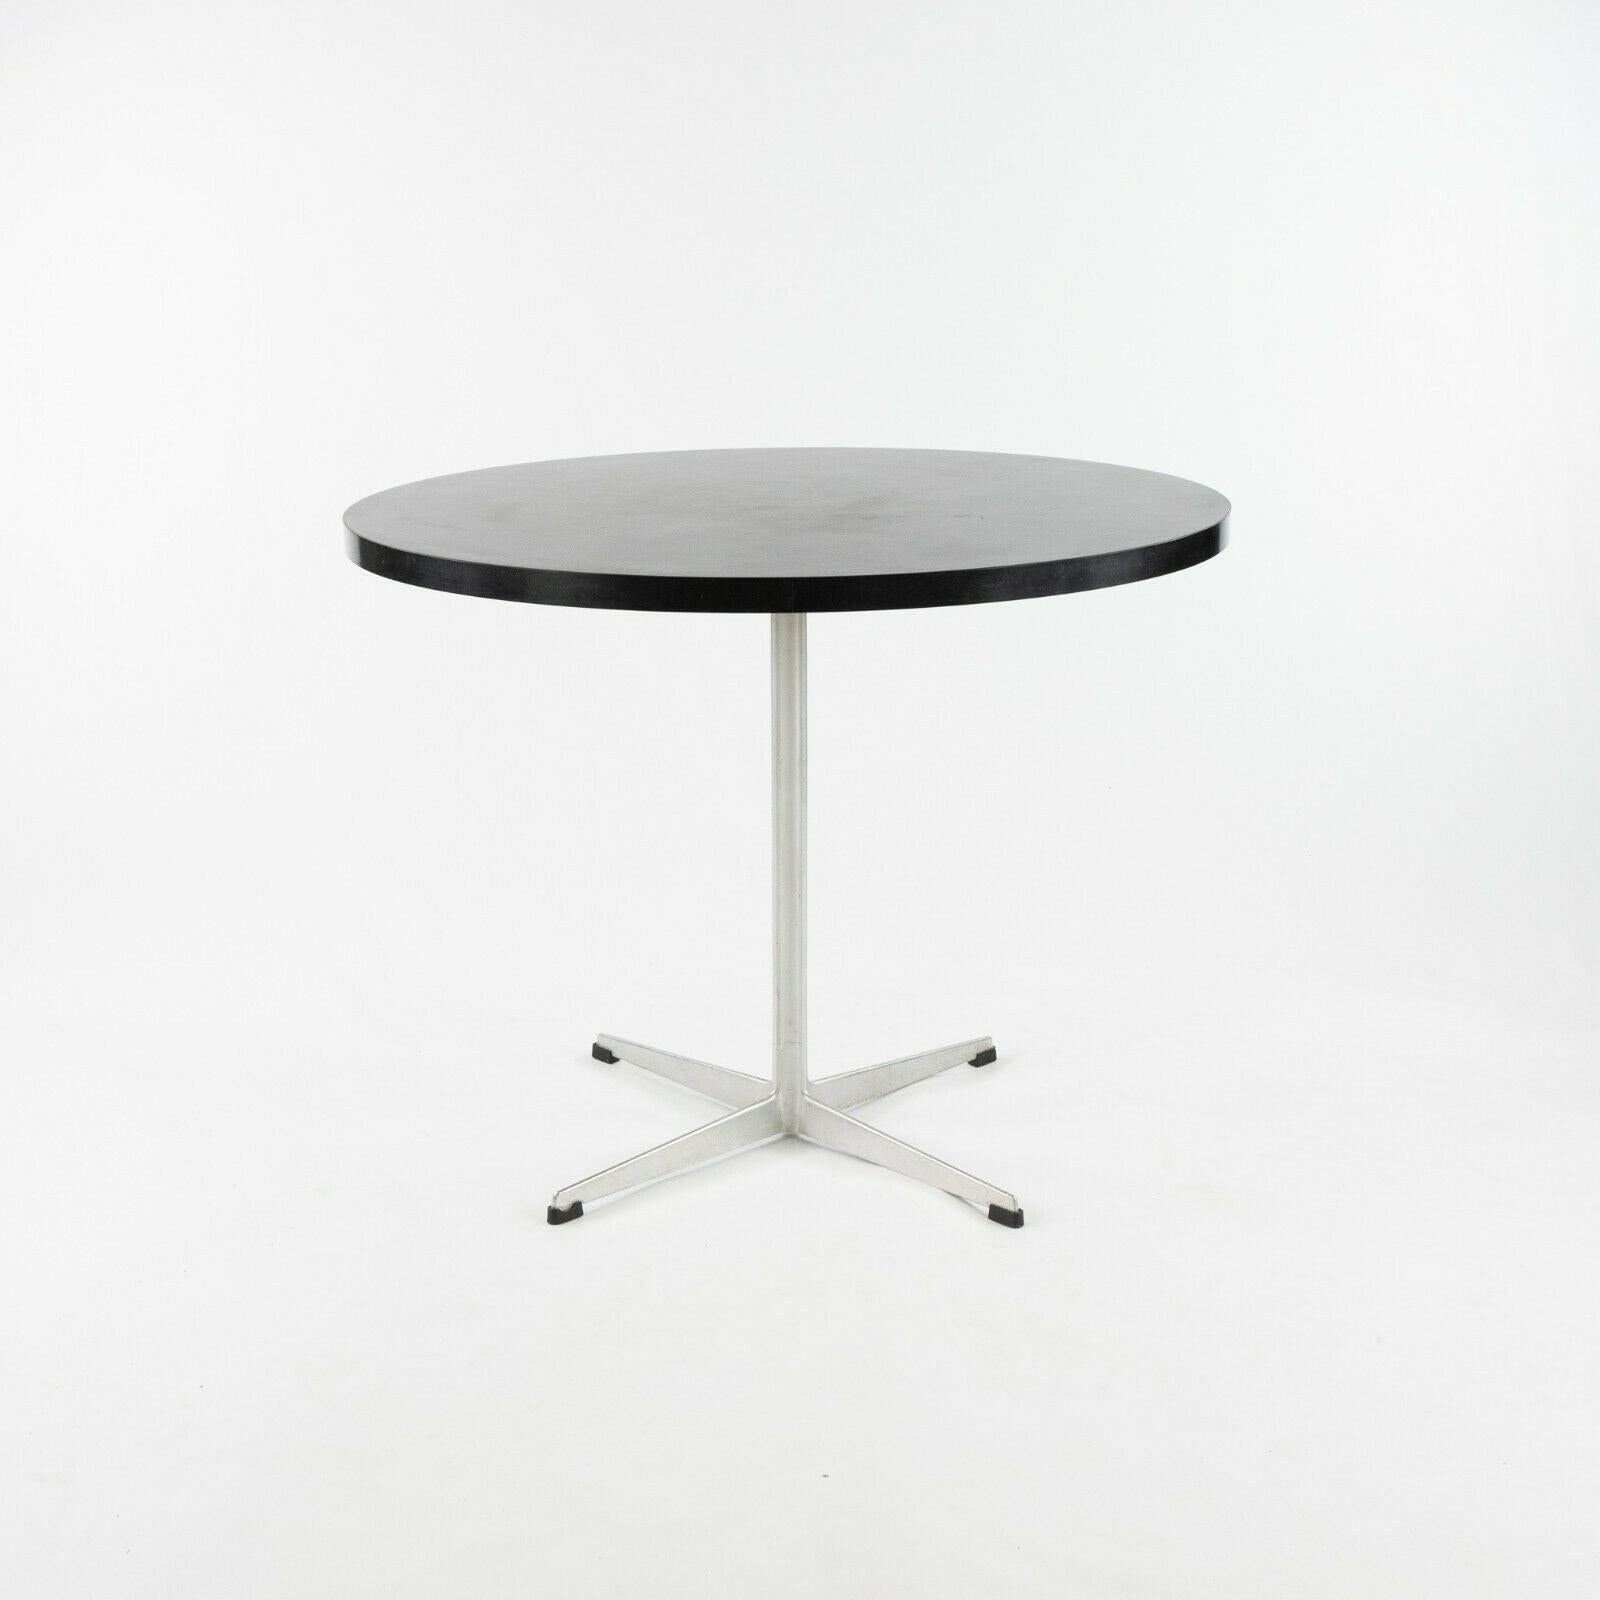 1963 Frederik Sieck for Fritz Hansen Dining Chairs + Arne Jacobsen Dining Table For Sale 2